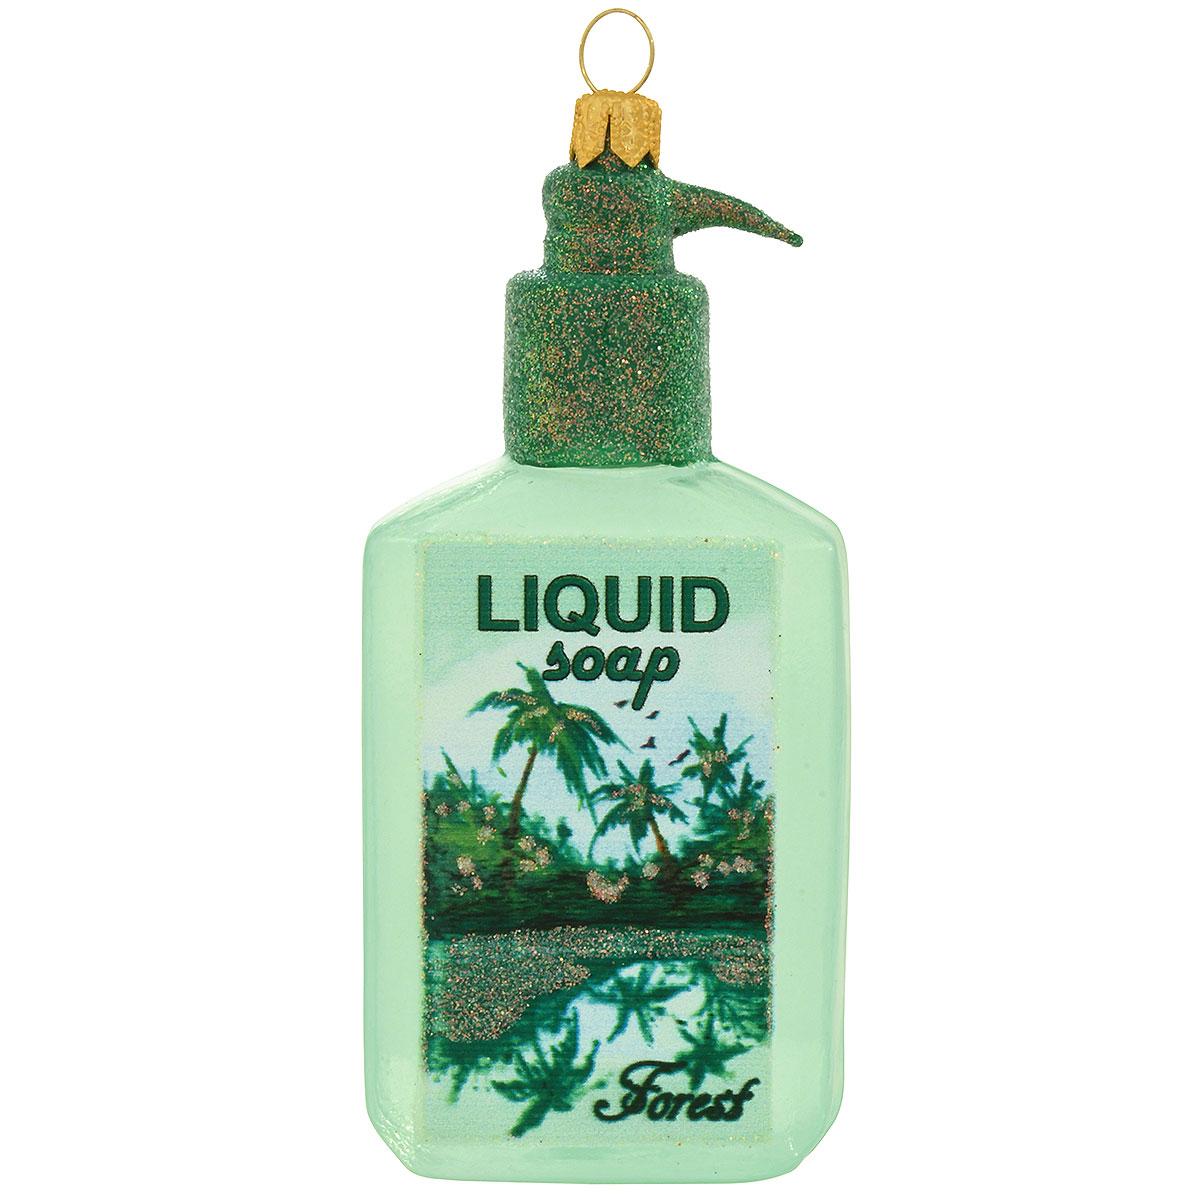 Liquid Soap Forest Glass Ornament